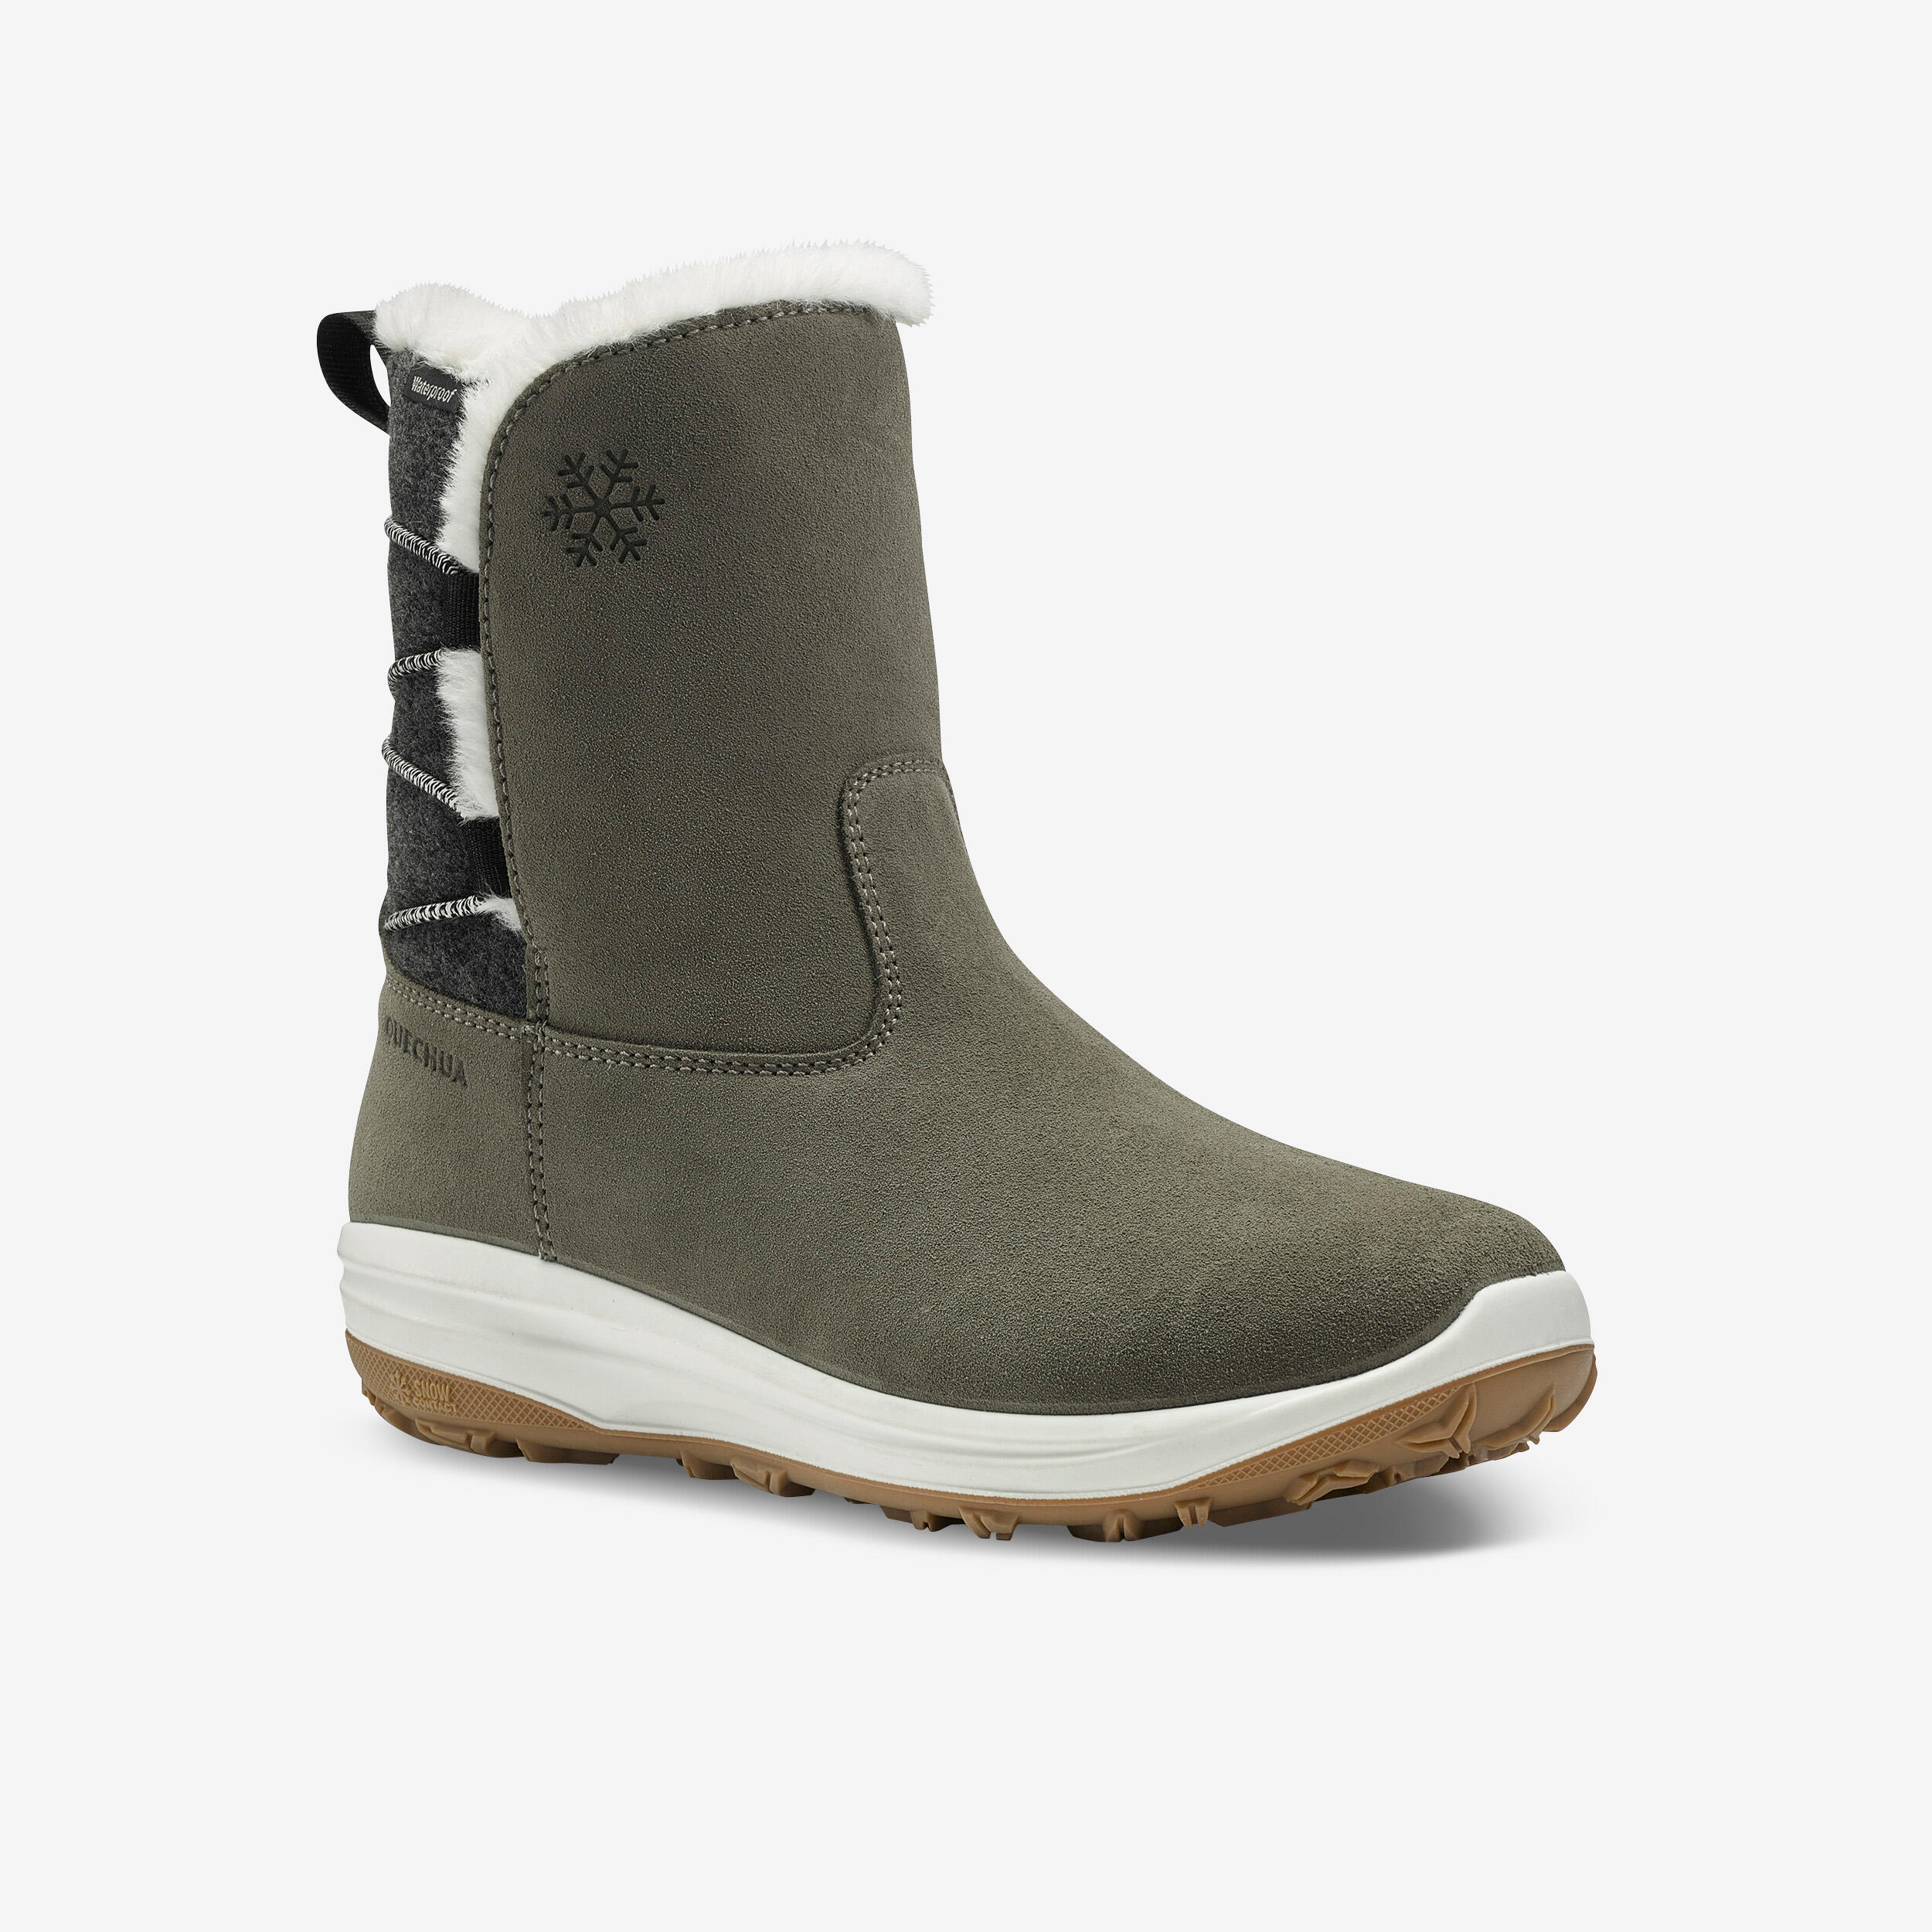 Women's warm waterproof snow hiking boots - SH500 leather 1/7